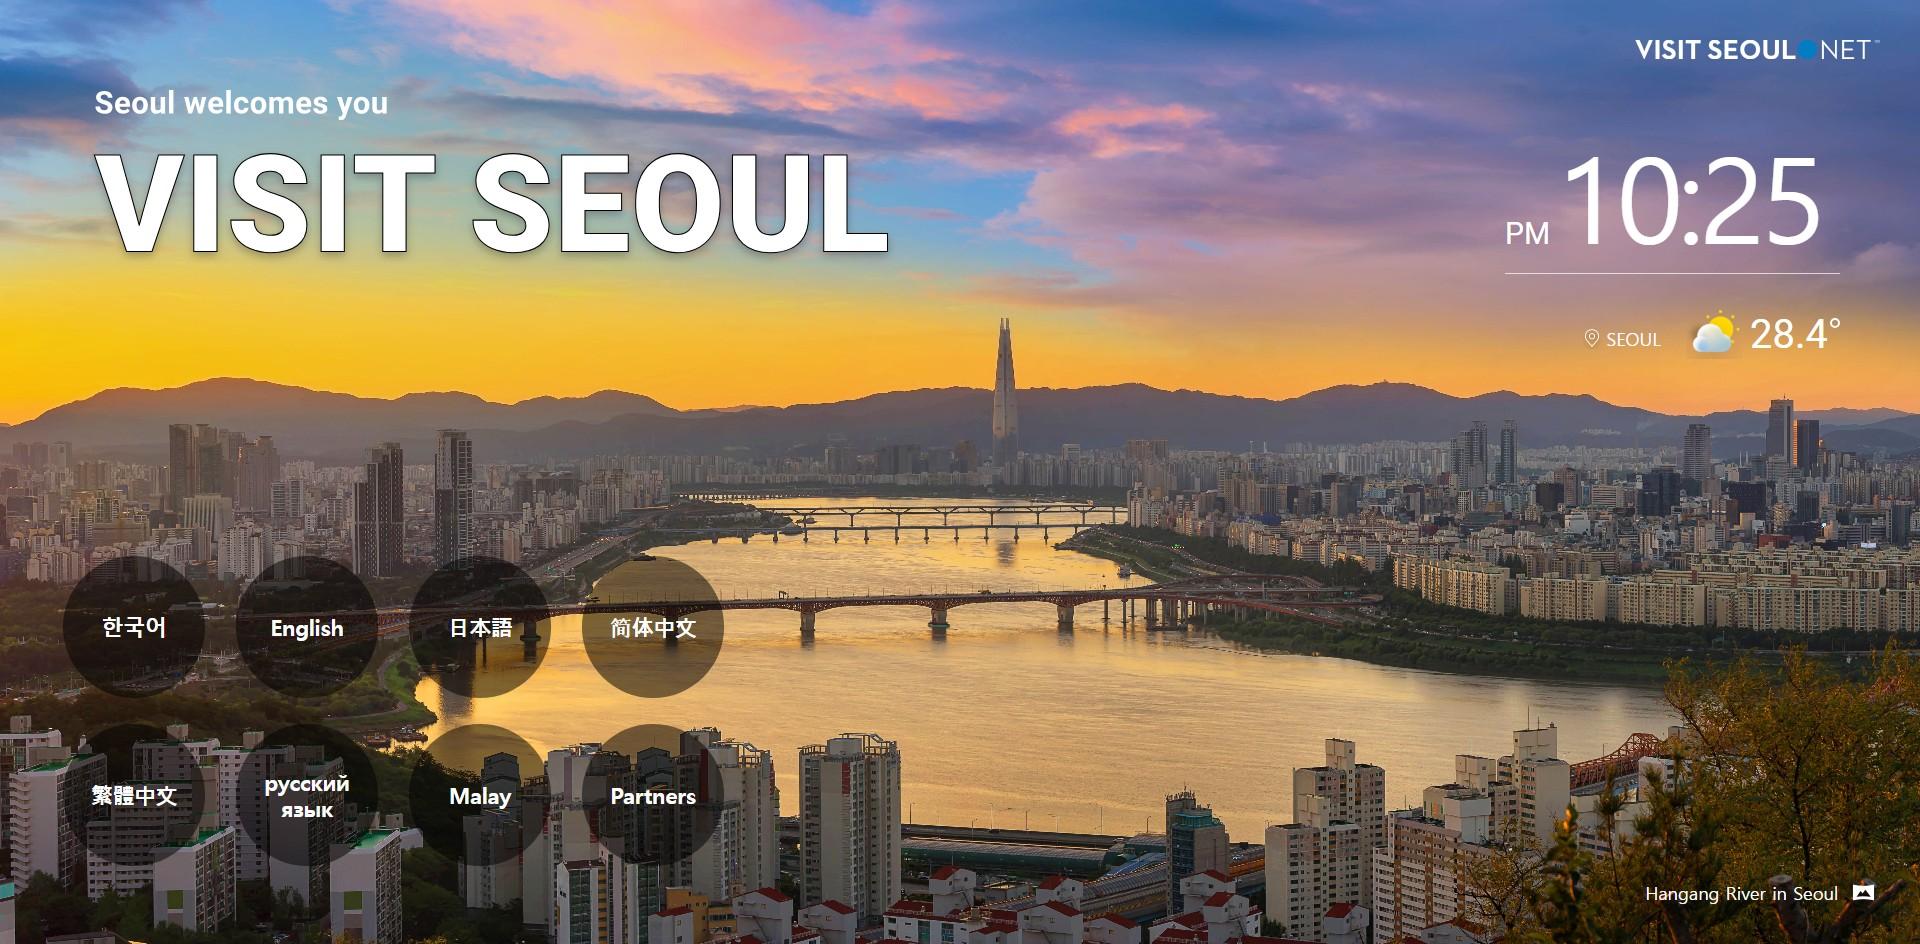 Seoul, South Korea travel information